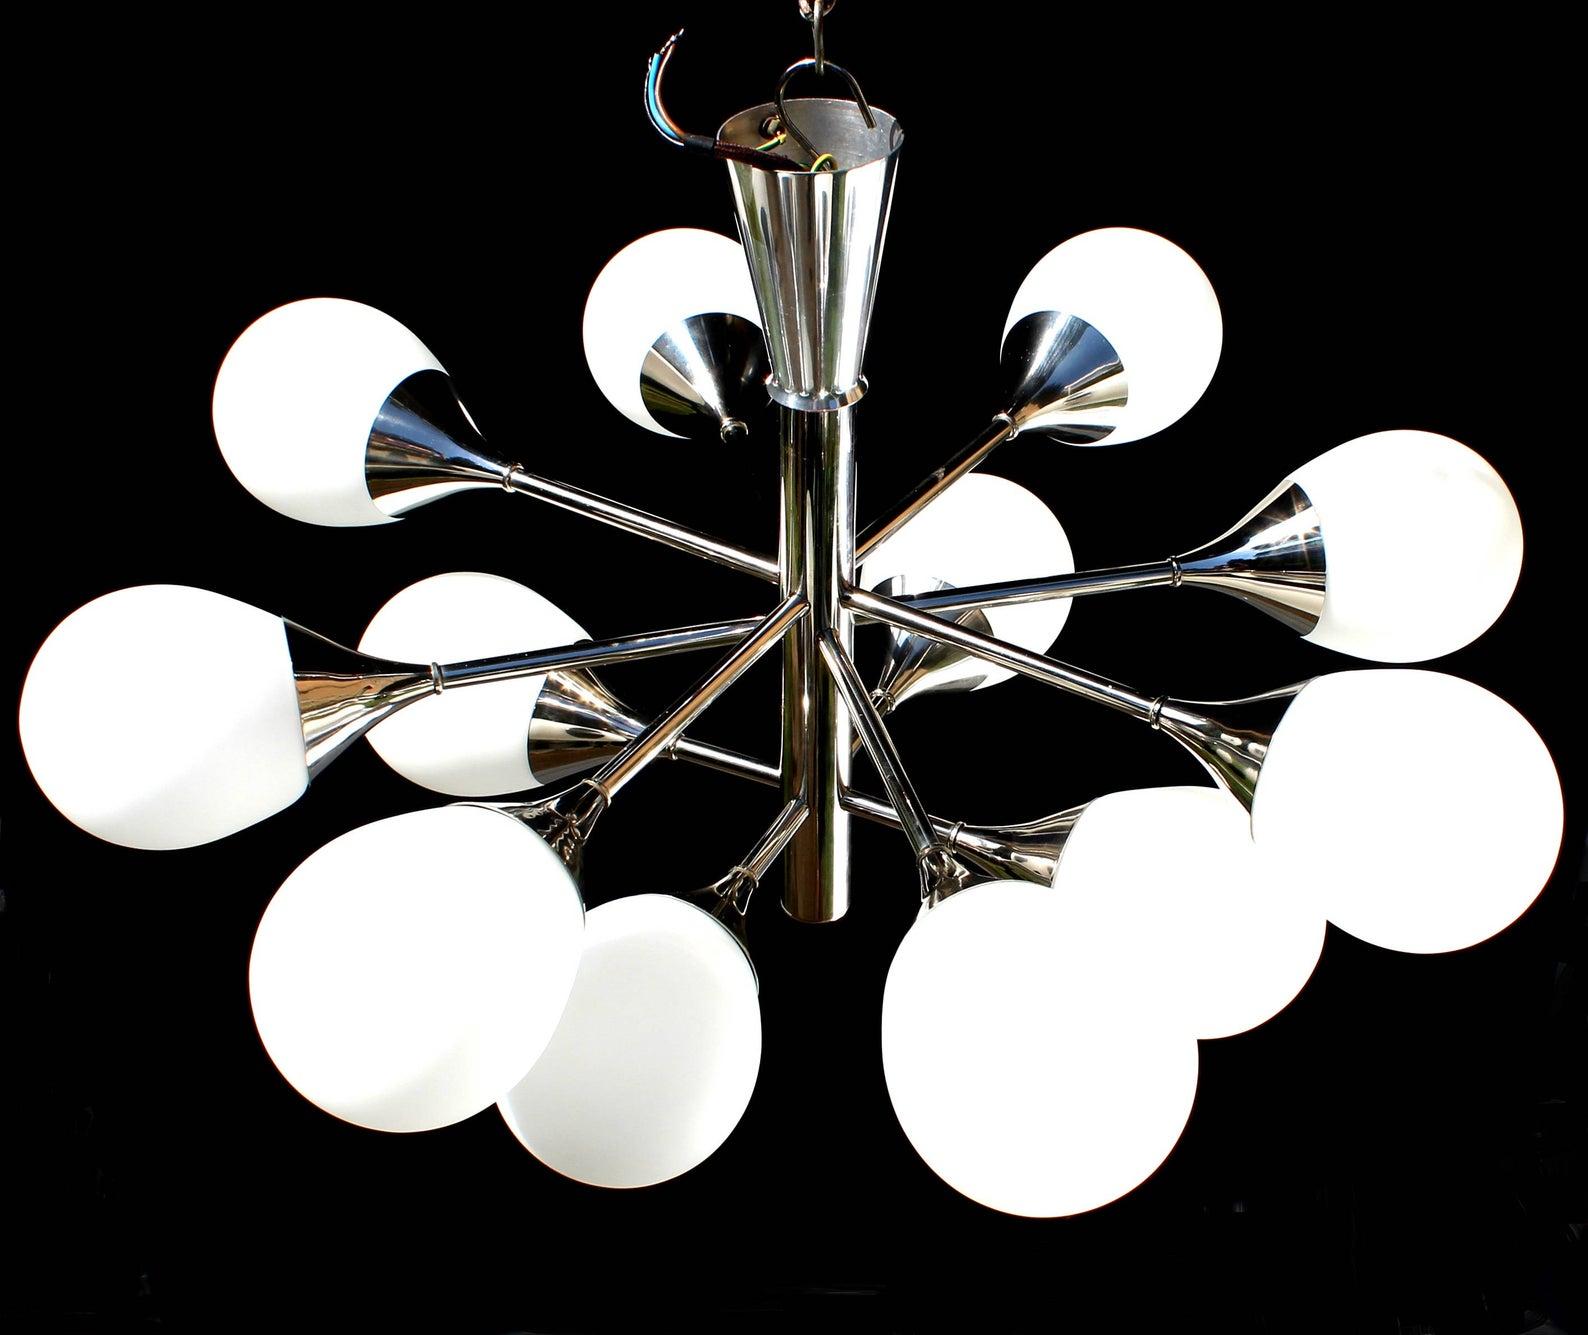 Fine organic Kaiser chandelier with opal glass globes brass chrome with 12-light
Measures: diameter 24